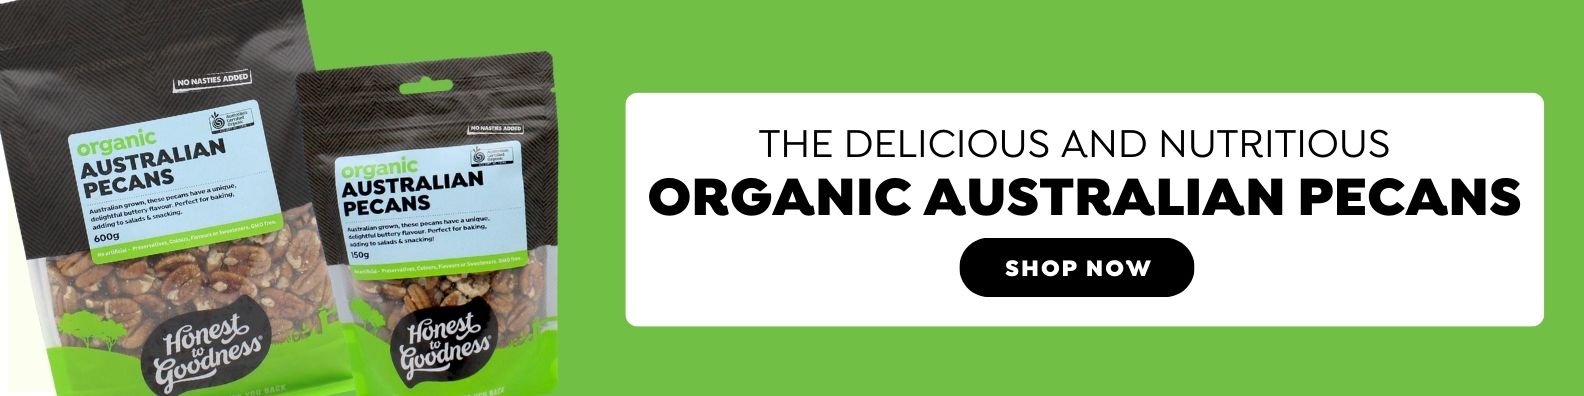 Organic Australian Pecans